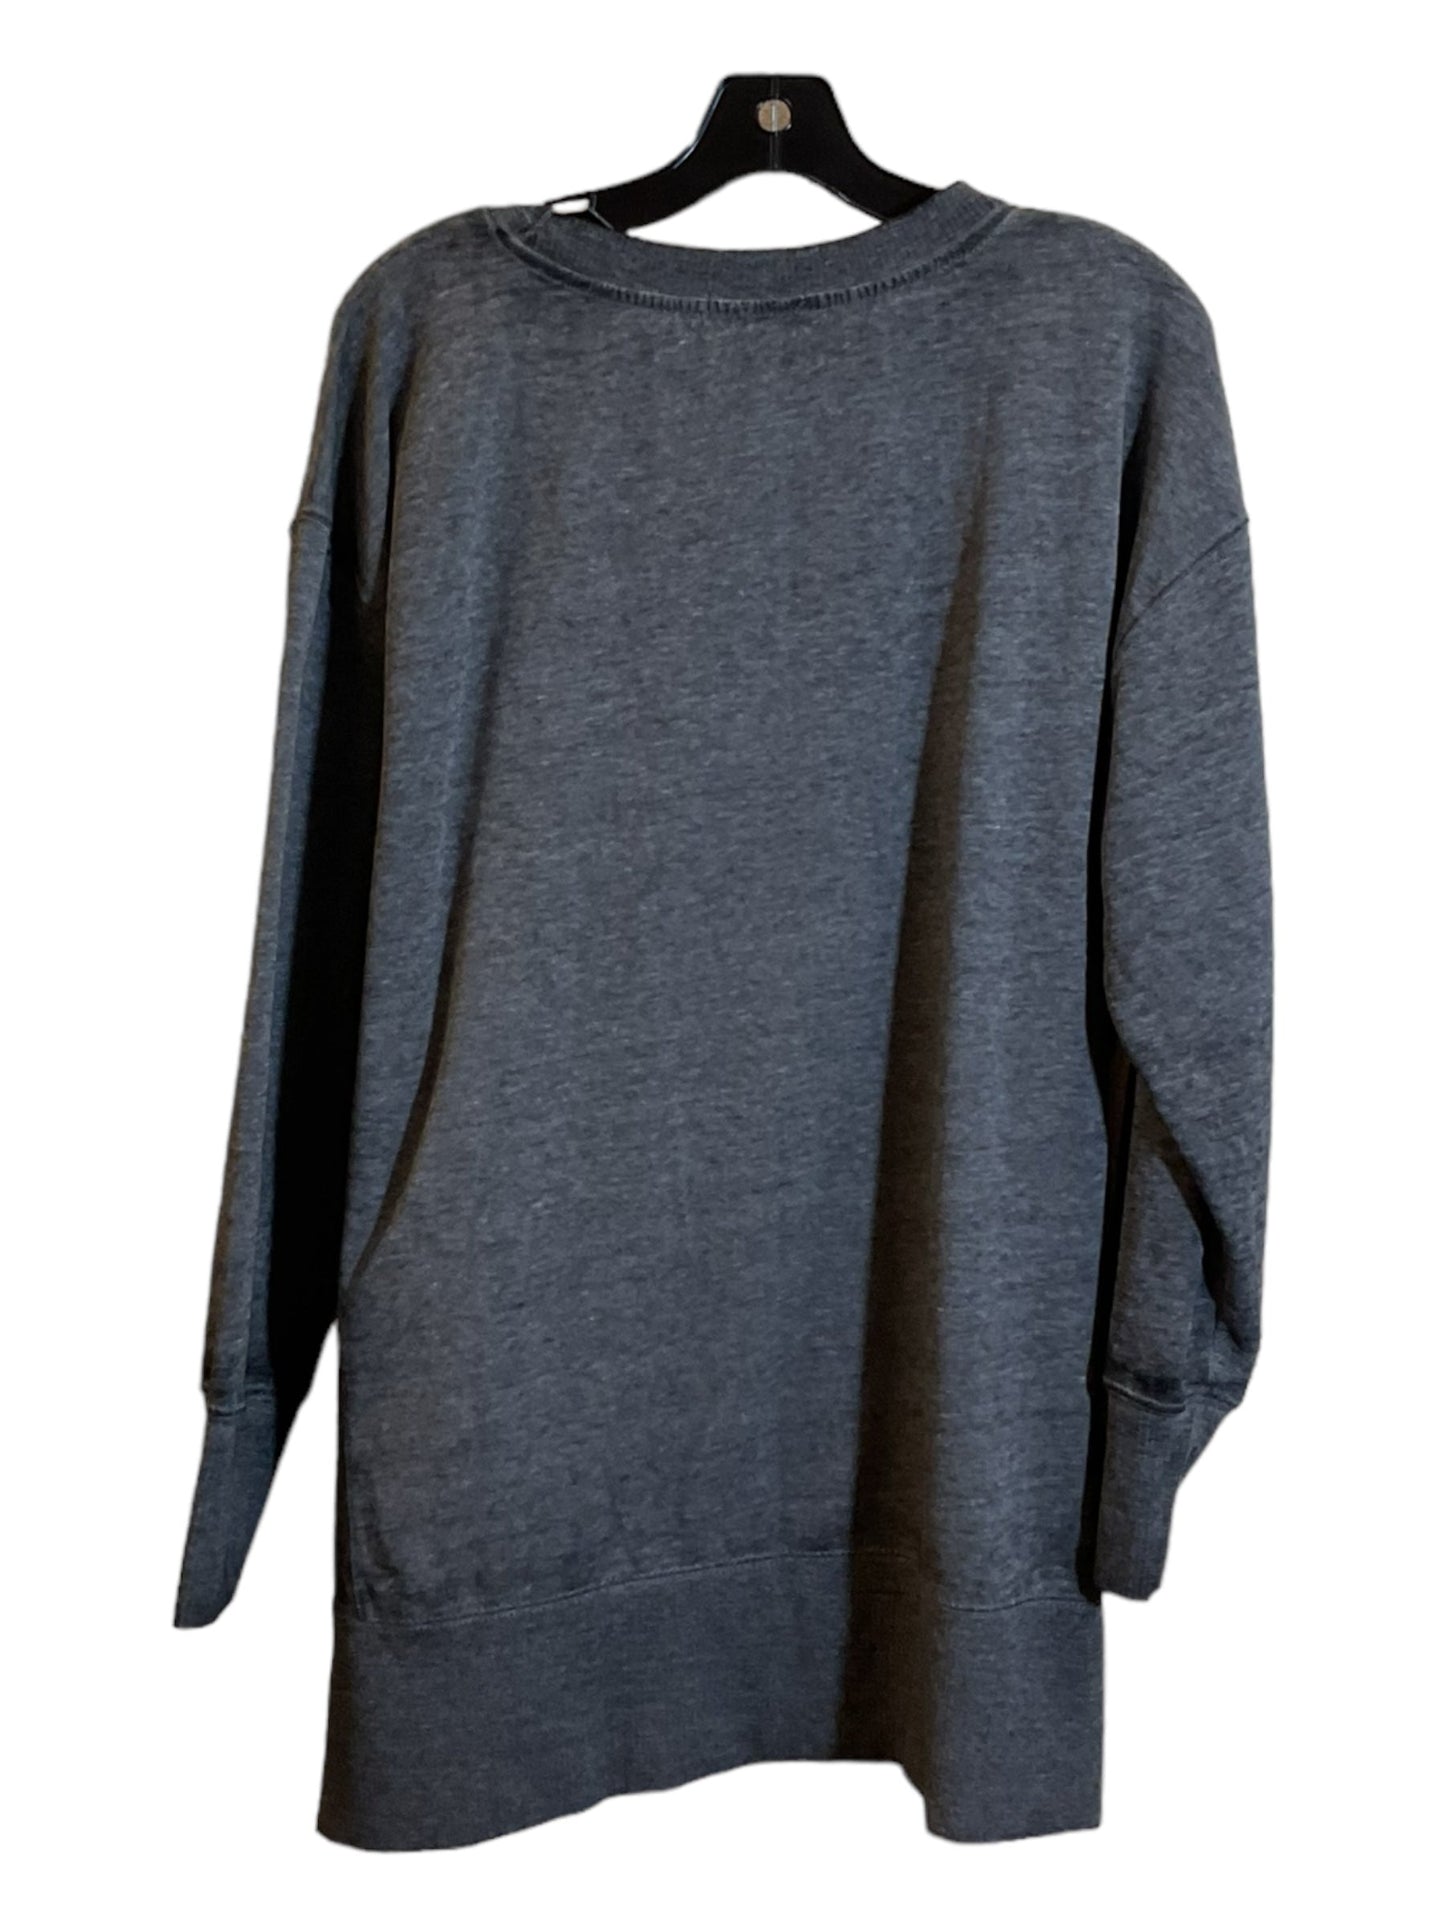 Sweatshirt Crewneck By Maurices  Size: L